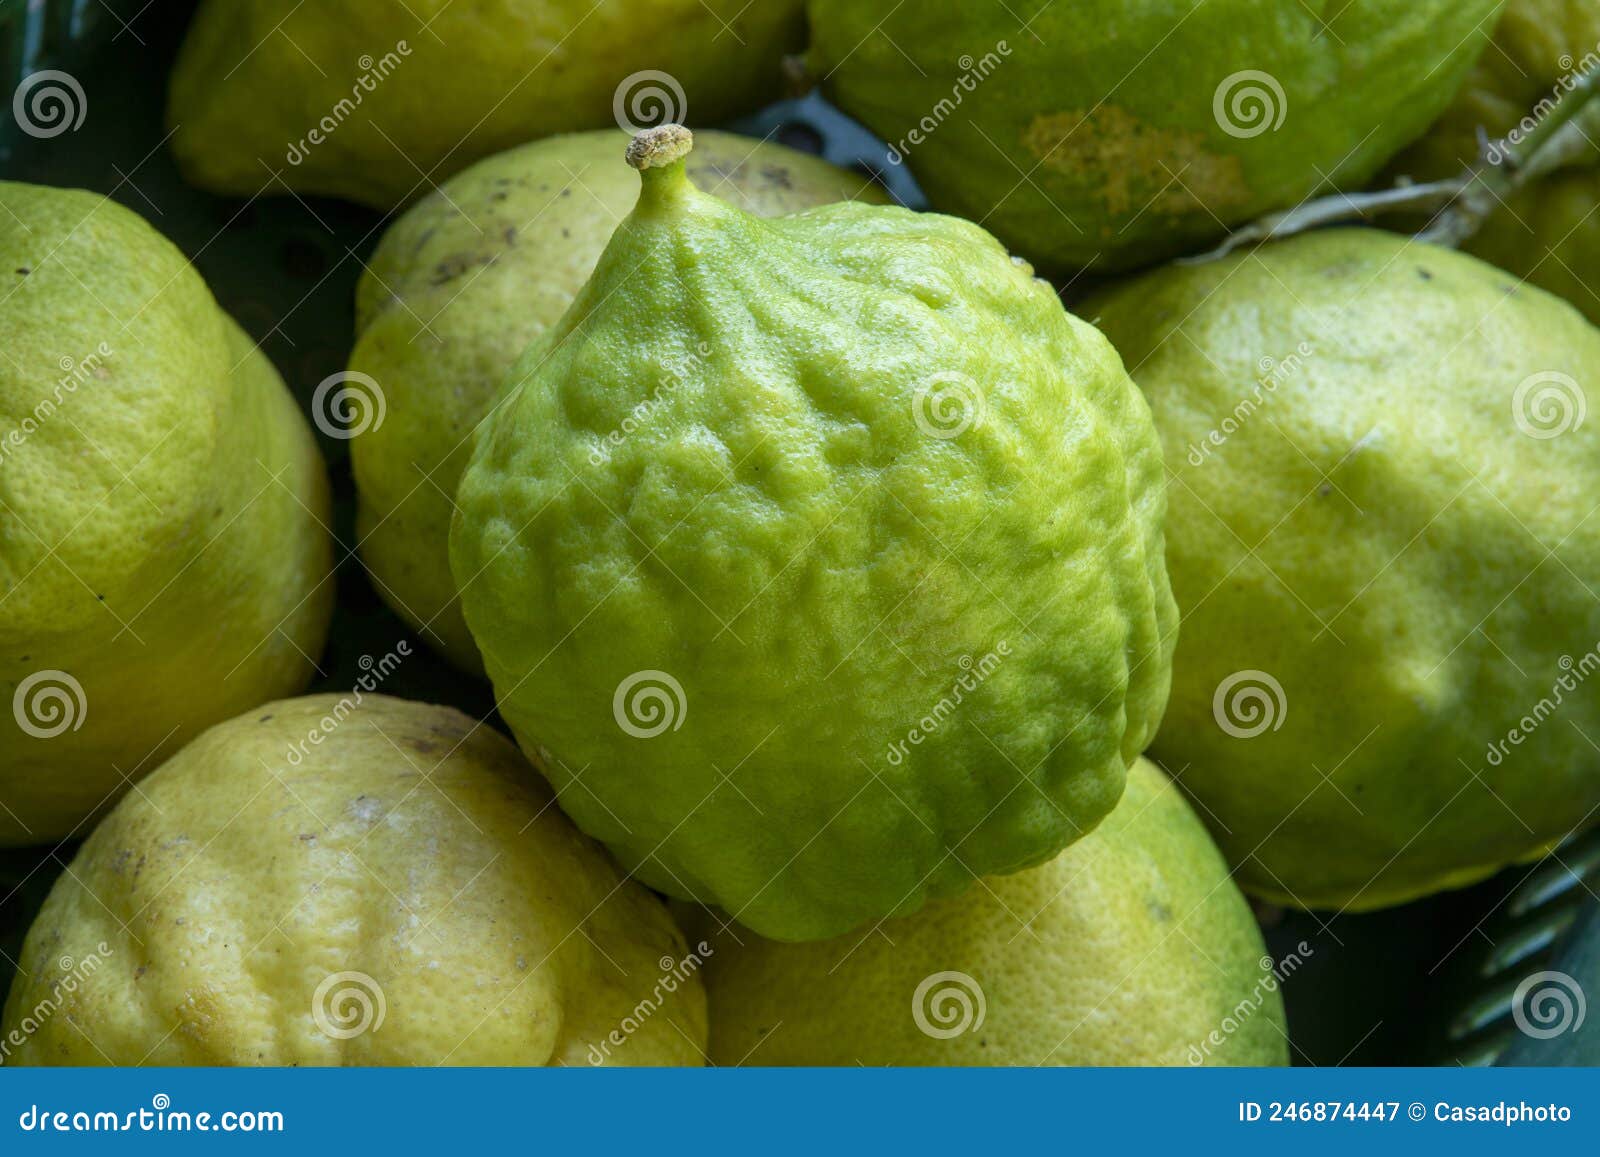 cider or cidra in portuguese is a citrus fruit